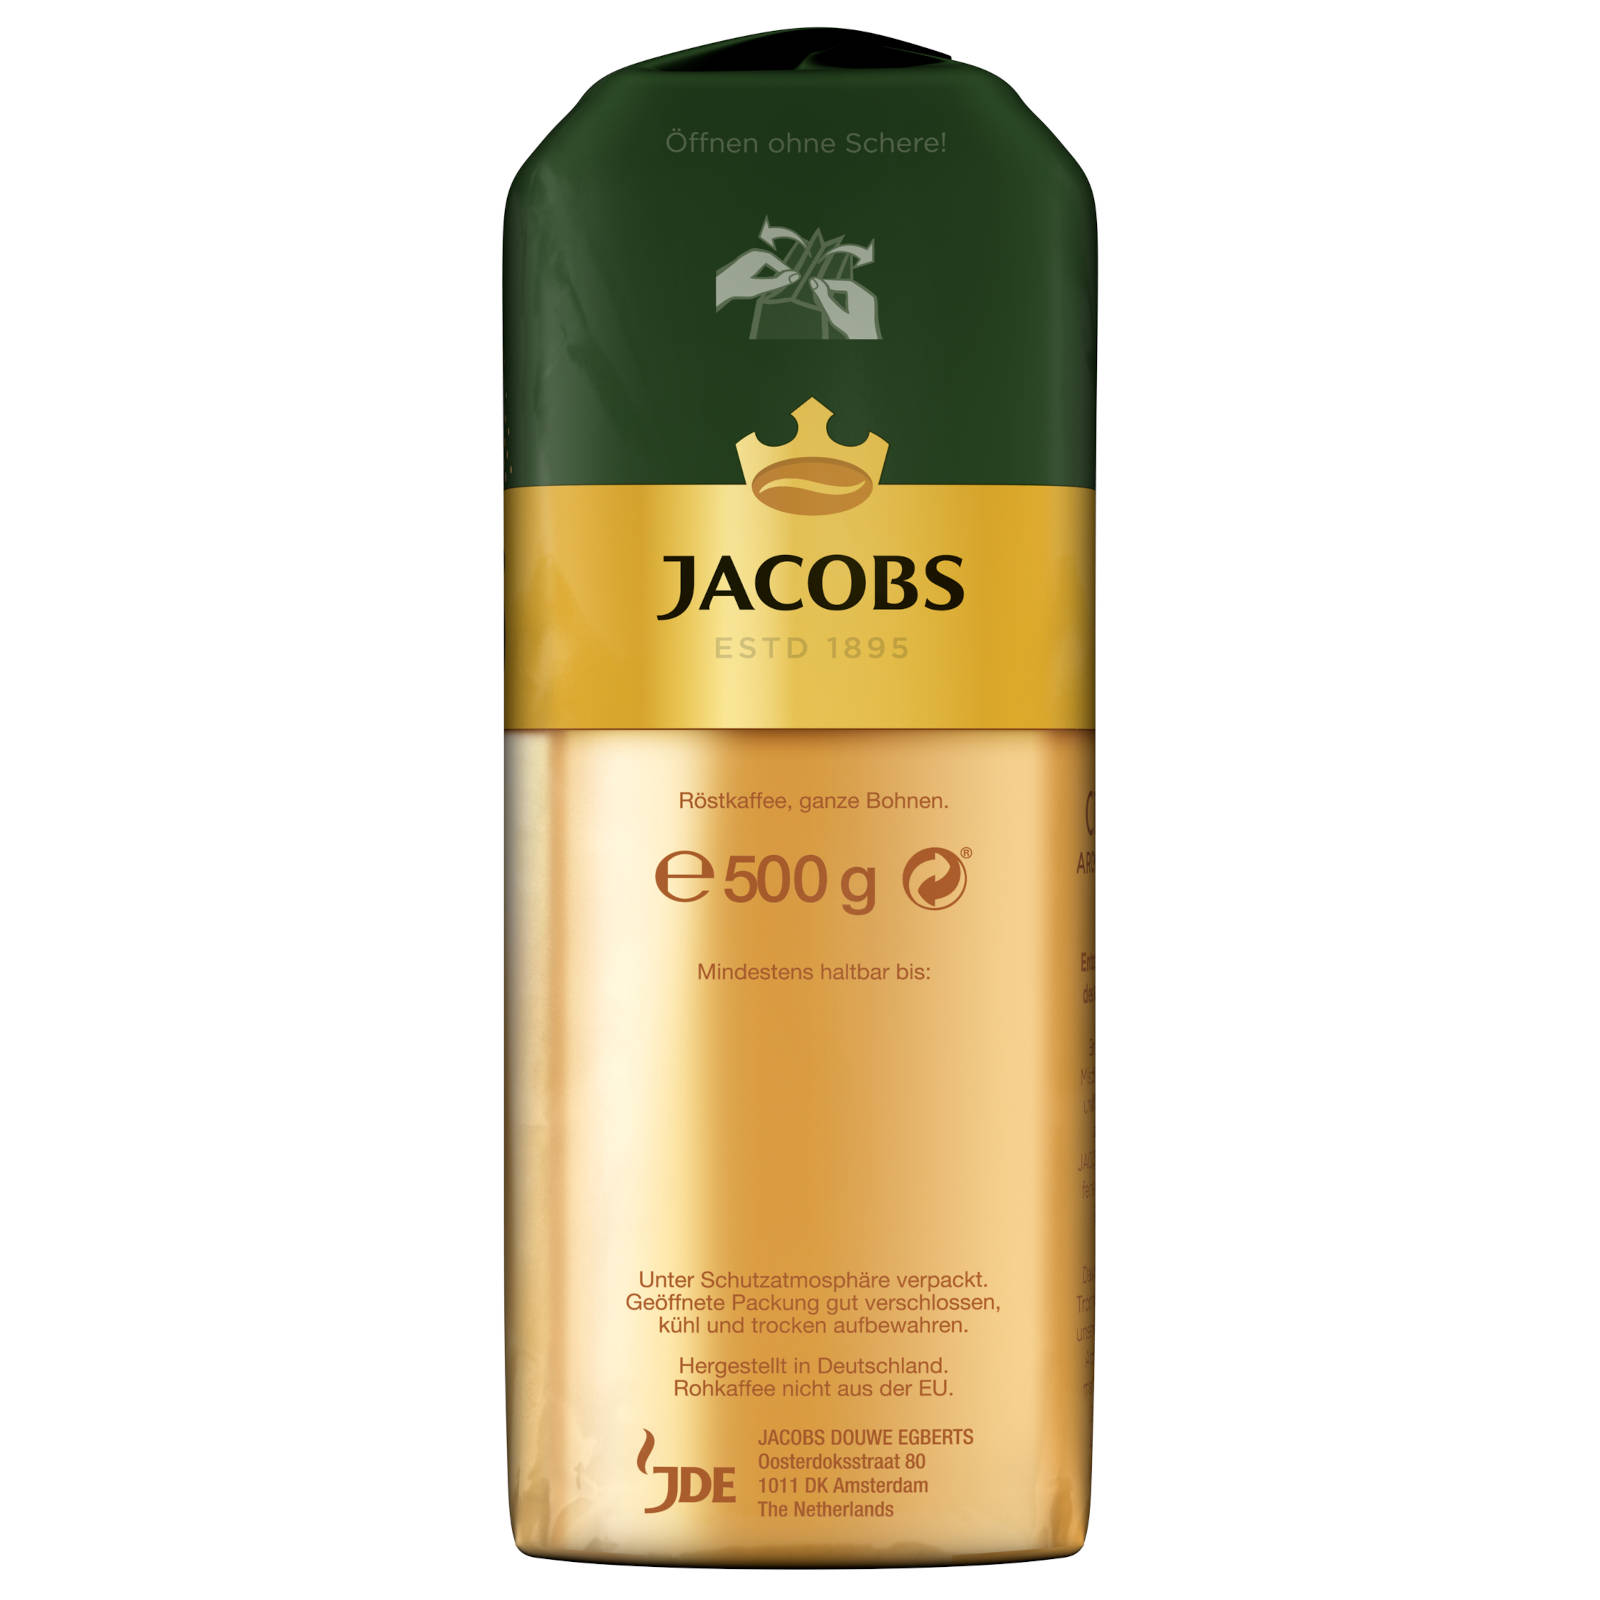 JACOBS Crema Aroma--Bohnen + + g 500 1 Becher x 1 Kaffeebohne (Kaffeevollautomat) 7 - Dose